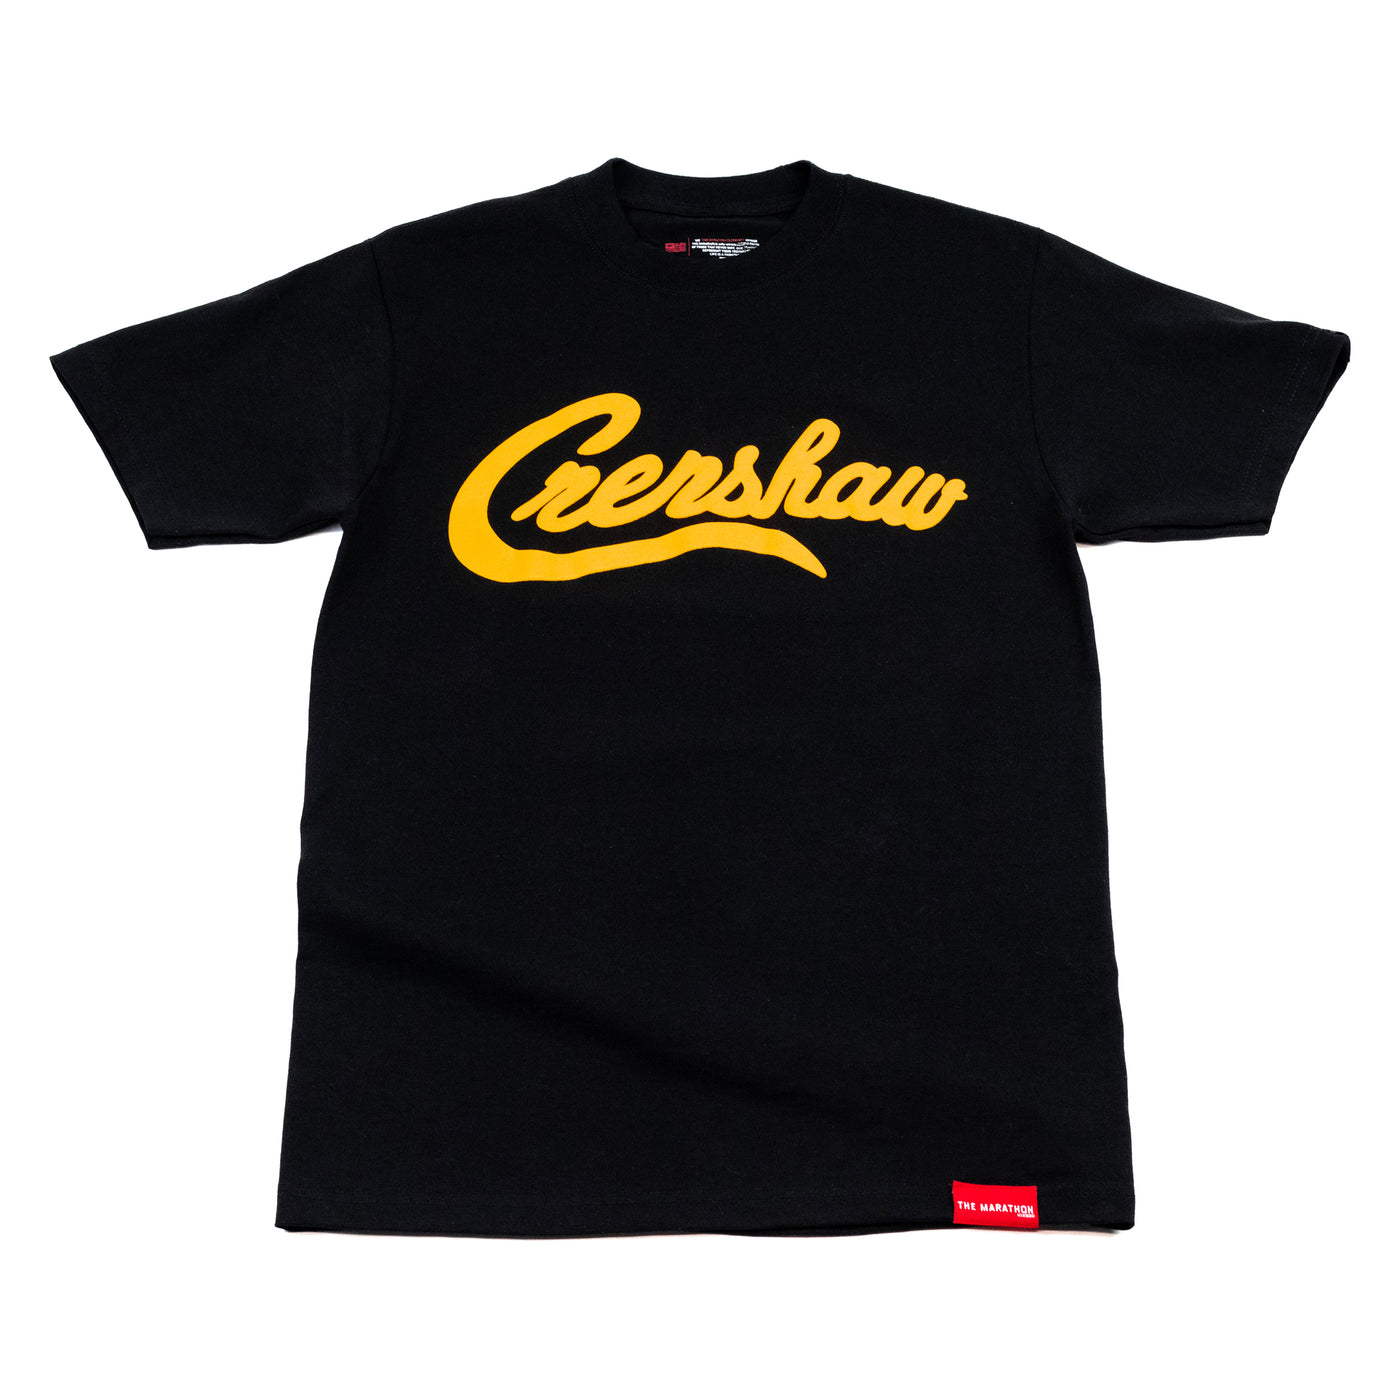 Crenshaw T-Shirt - Black/Gold - Front